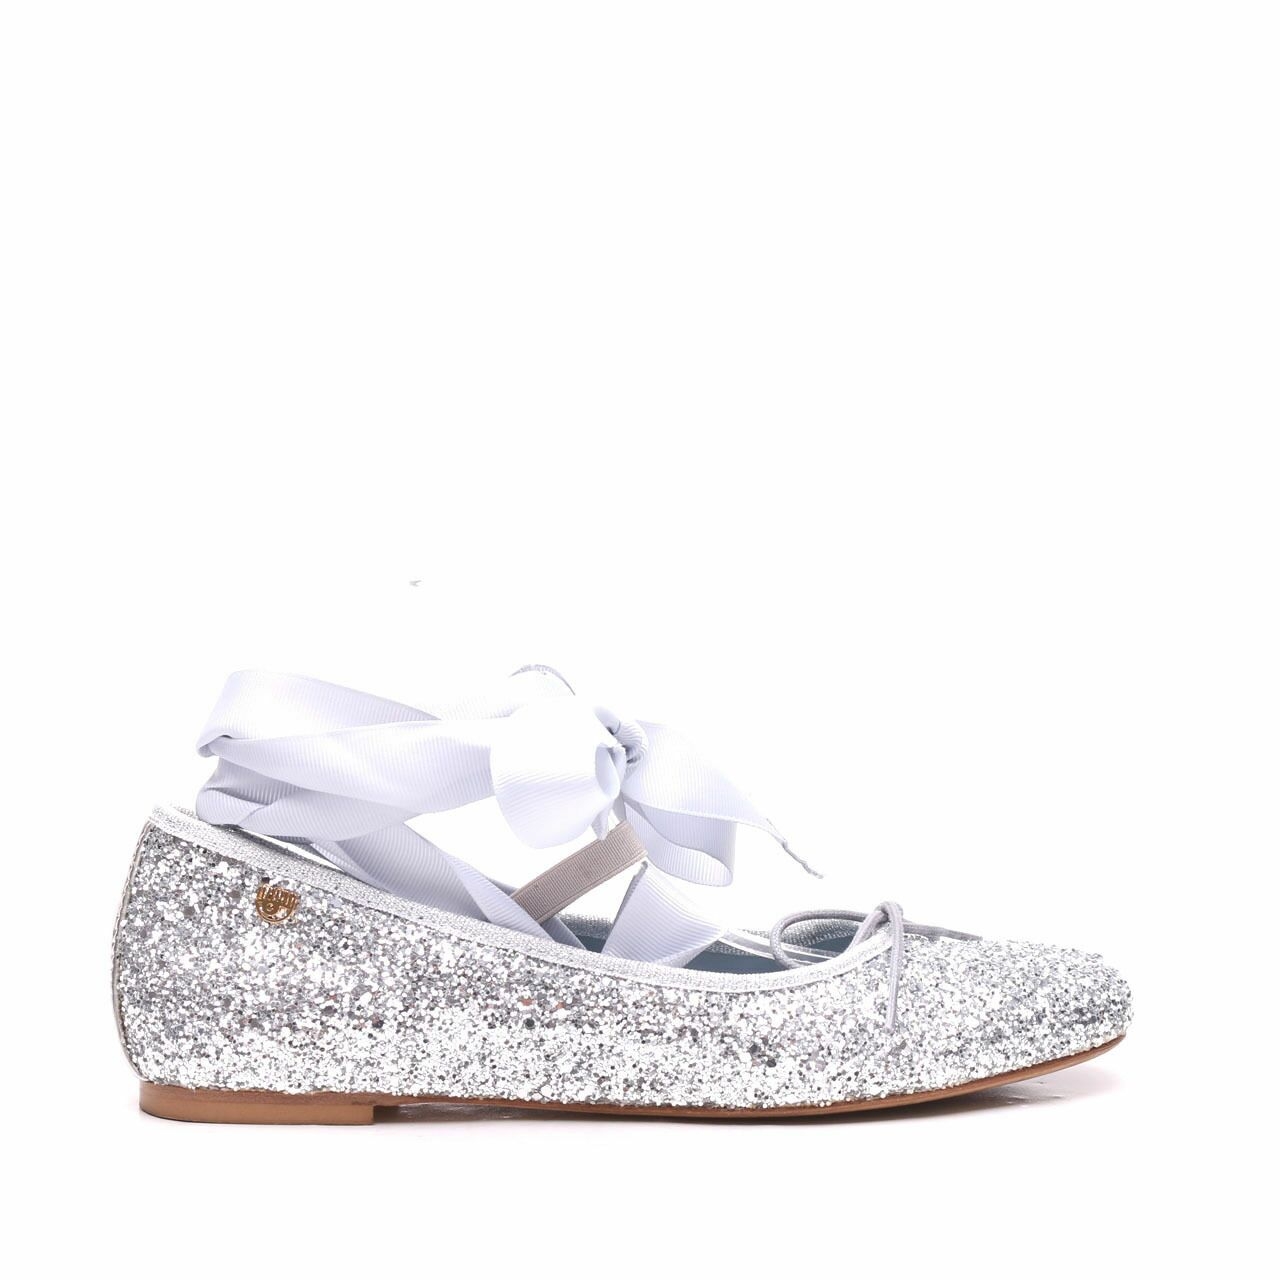 Chiara Ferragni Silver Glitter Flats